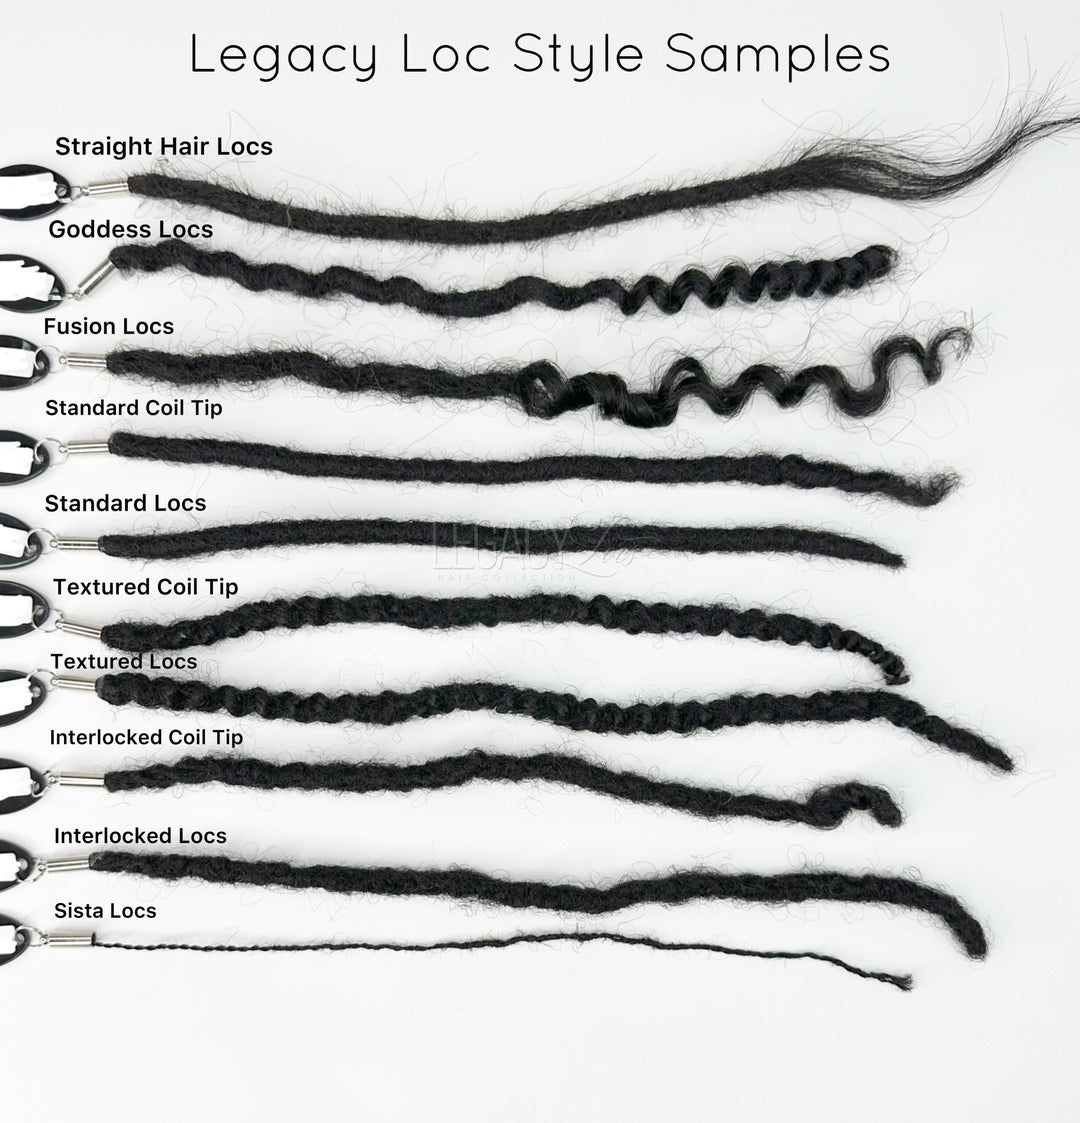 Legacy Loc Styles Sample